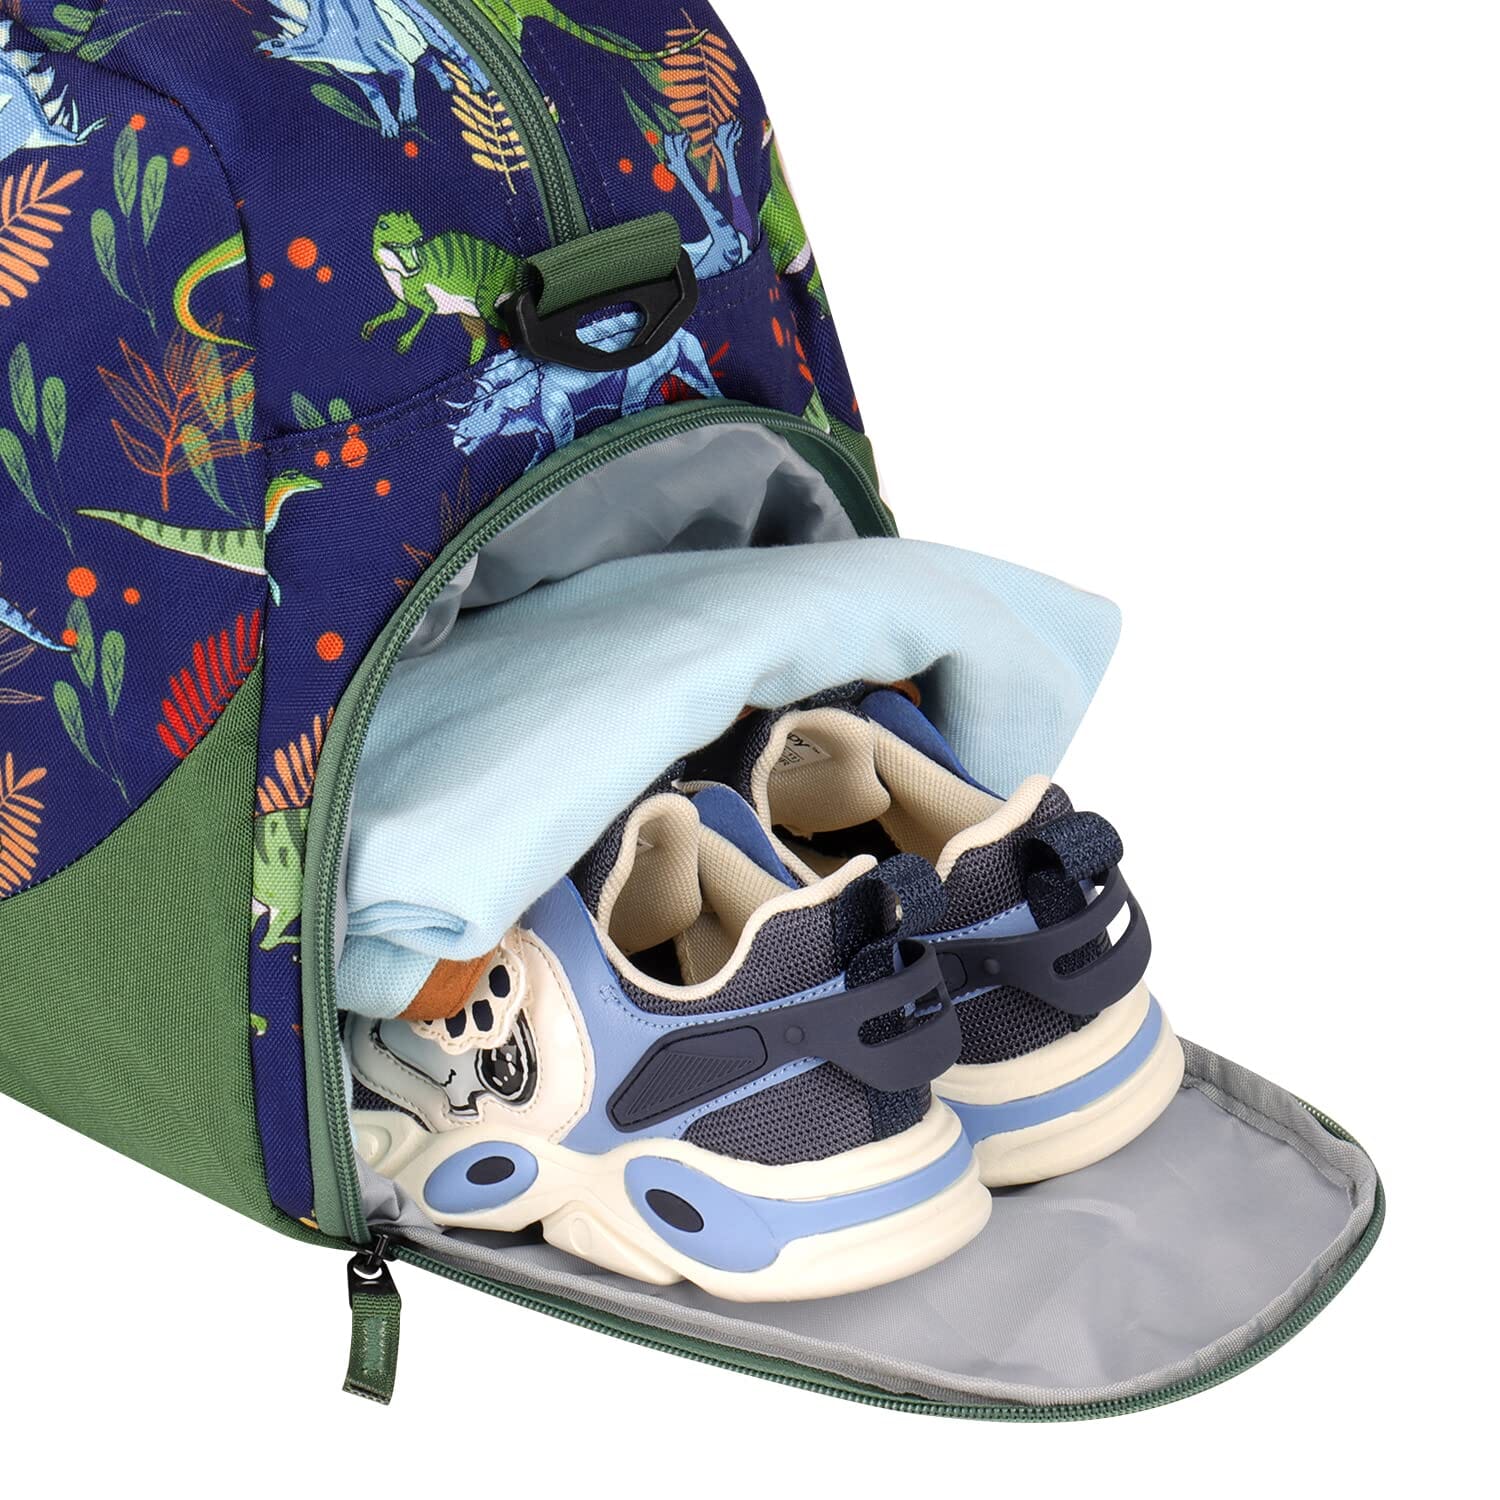 Choco Mocha Kids Dinosaur Duffle Bag for Boys, Blue-Green Weekend Bag for Kids 20.08*9.06*10.63 inches chocomochakids 